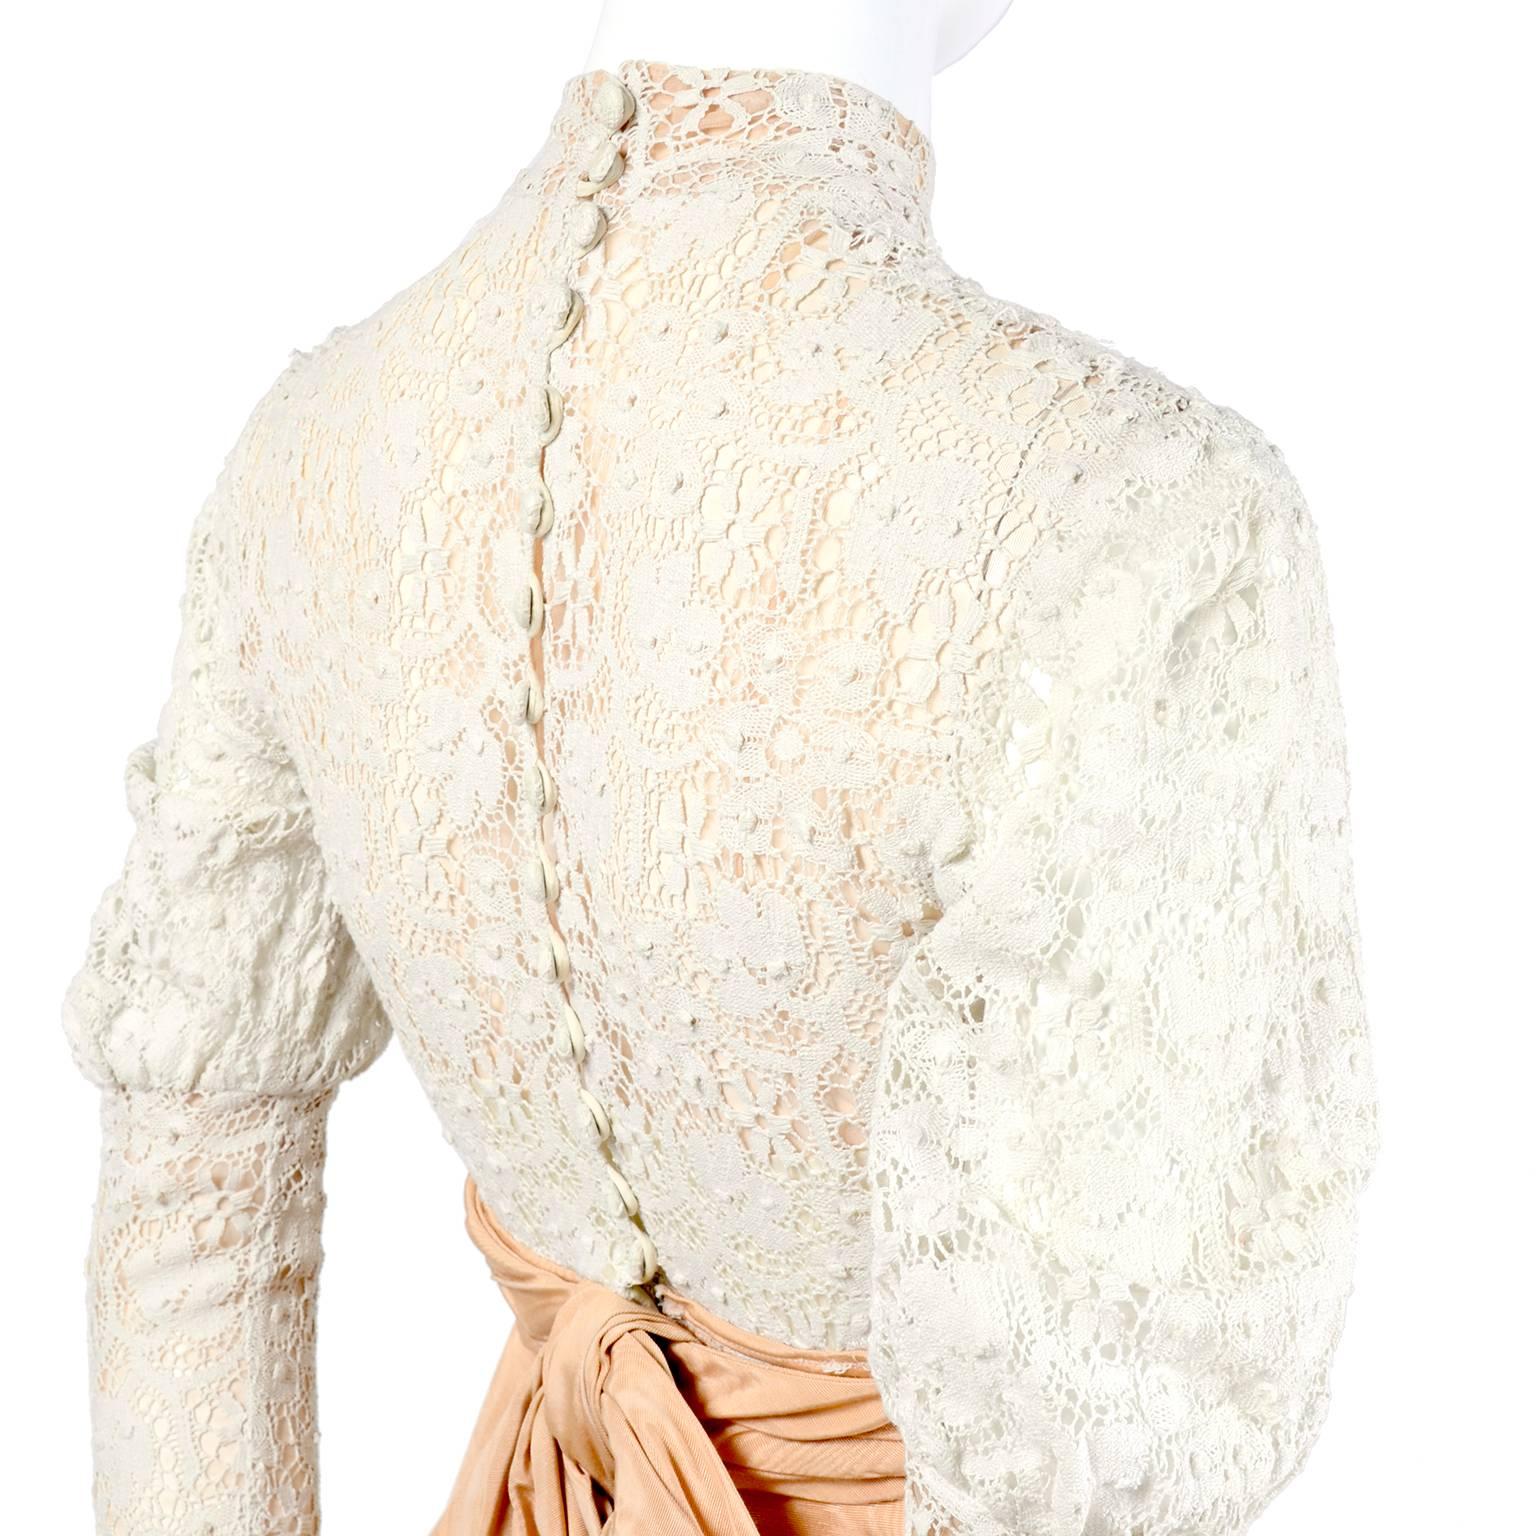 Beige Victorian Antique Crochet Lace Vintage Dress w/ High Collar Wedding Gown Size 2 For Sale